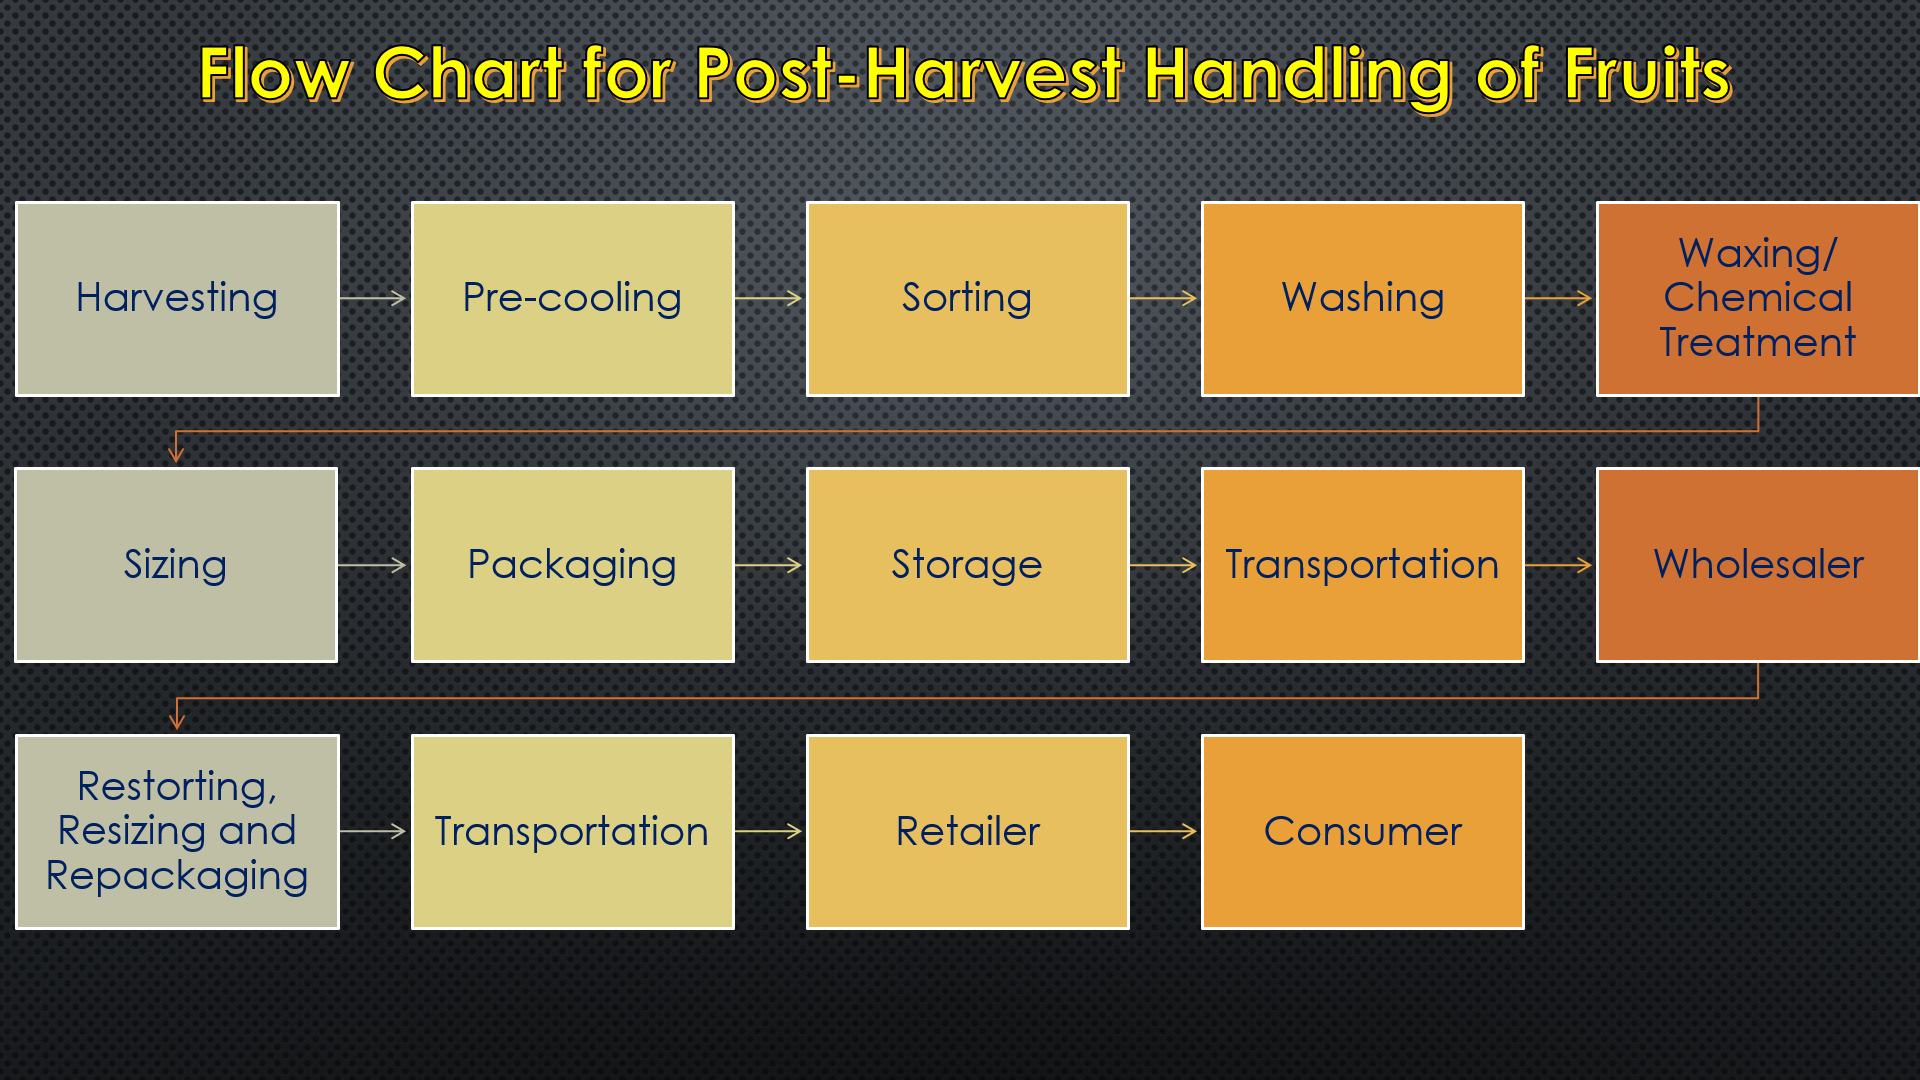 Flow Chart for Post-Harvest Handling of Fruits